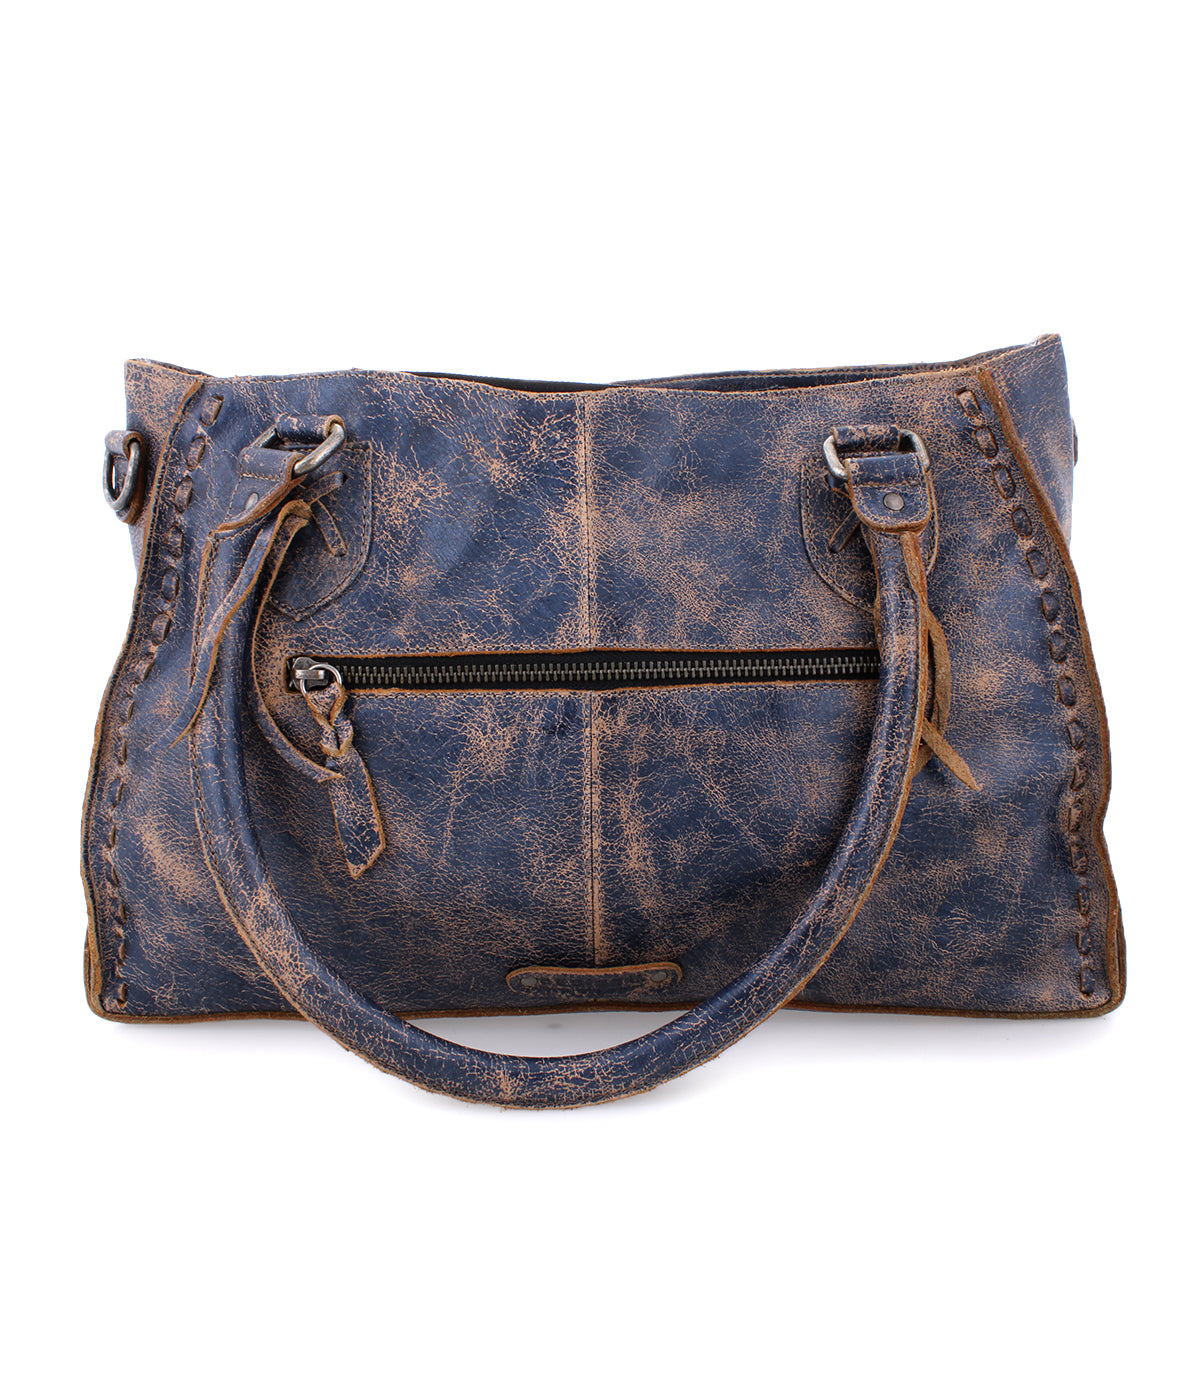 A Rockababy blue leather handbag by Bed Stu.